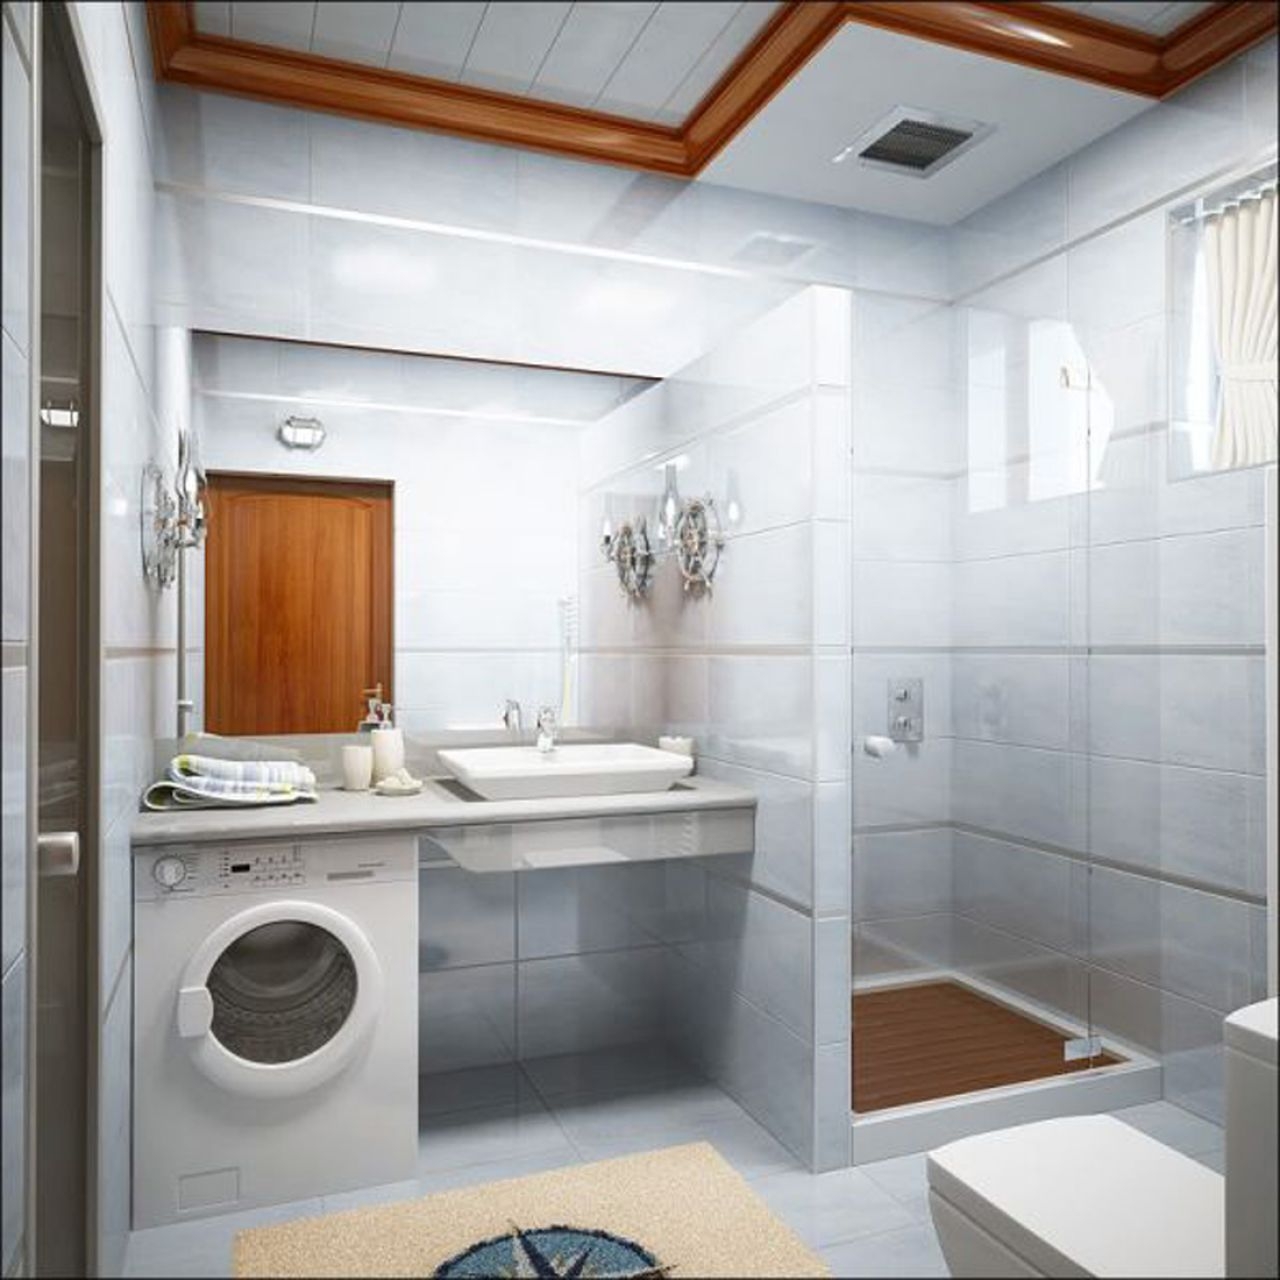 6 sq m bathroom design with shower